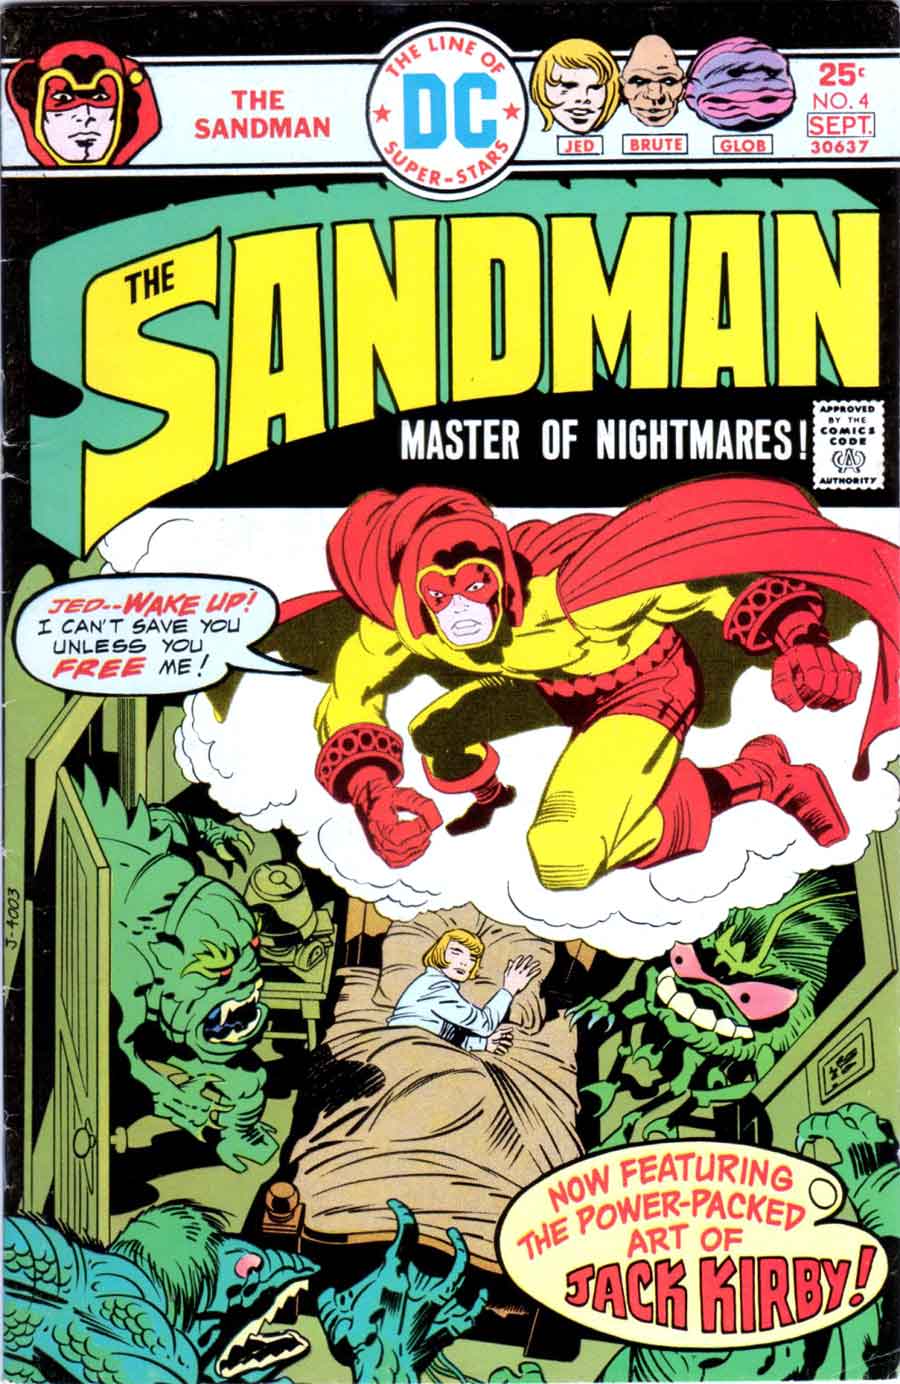 The Sandman v1 #4 dc bronze age comic book cover art by Jack Kirby